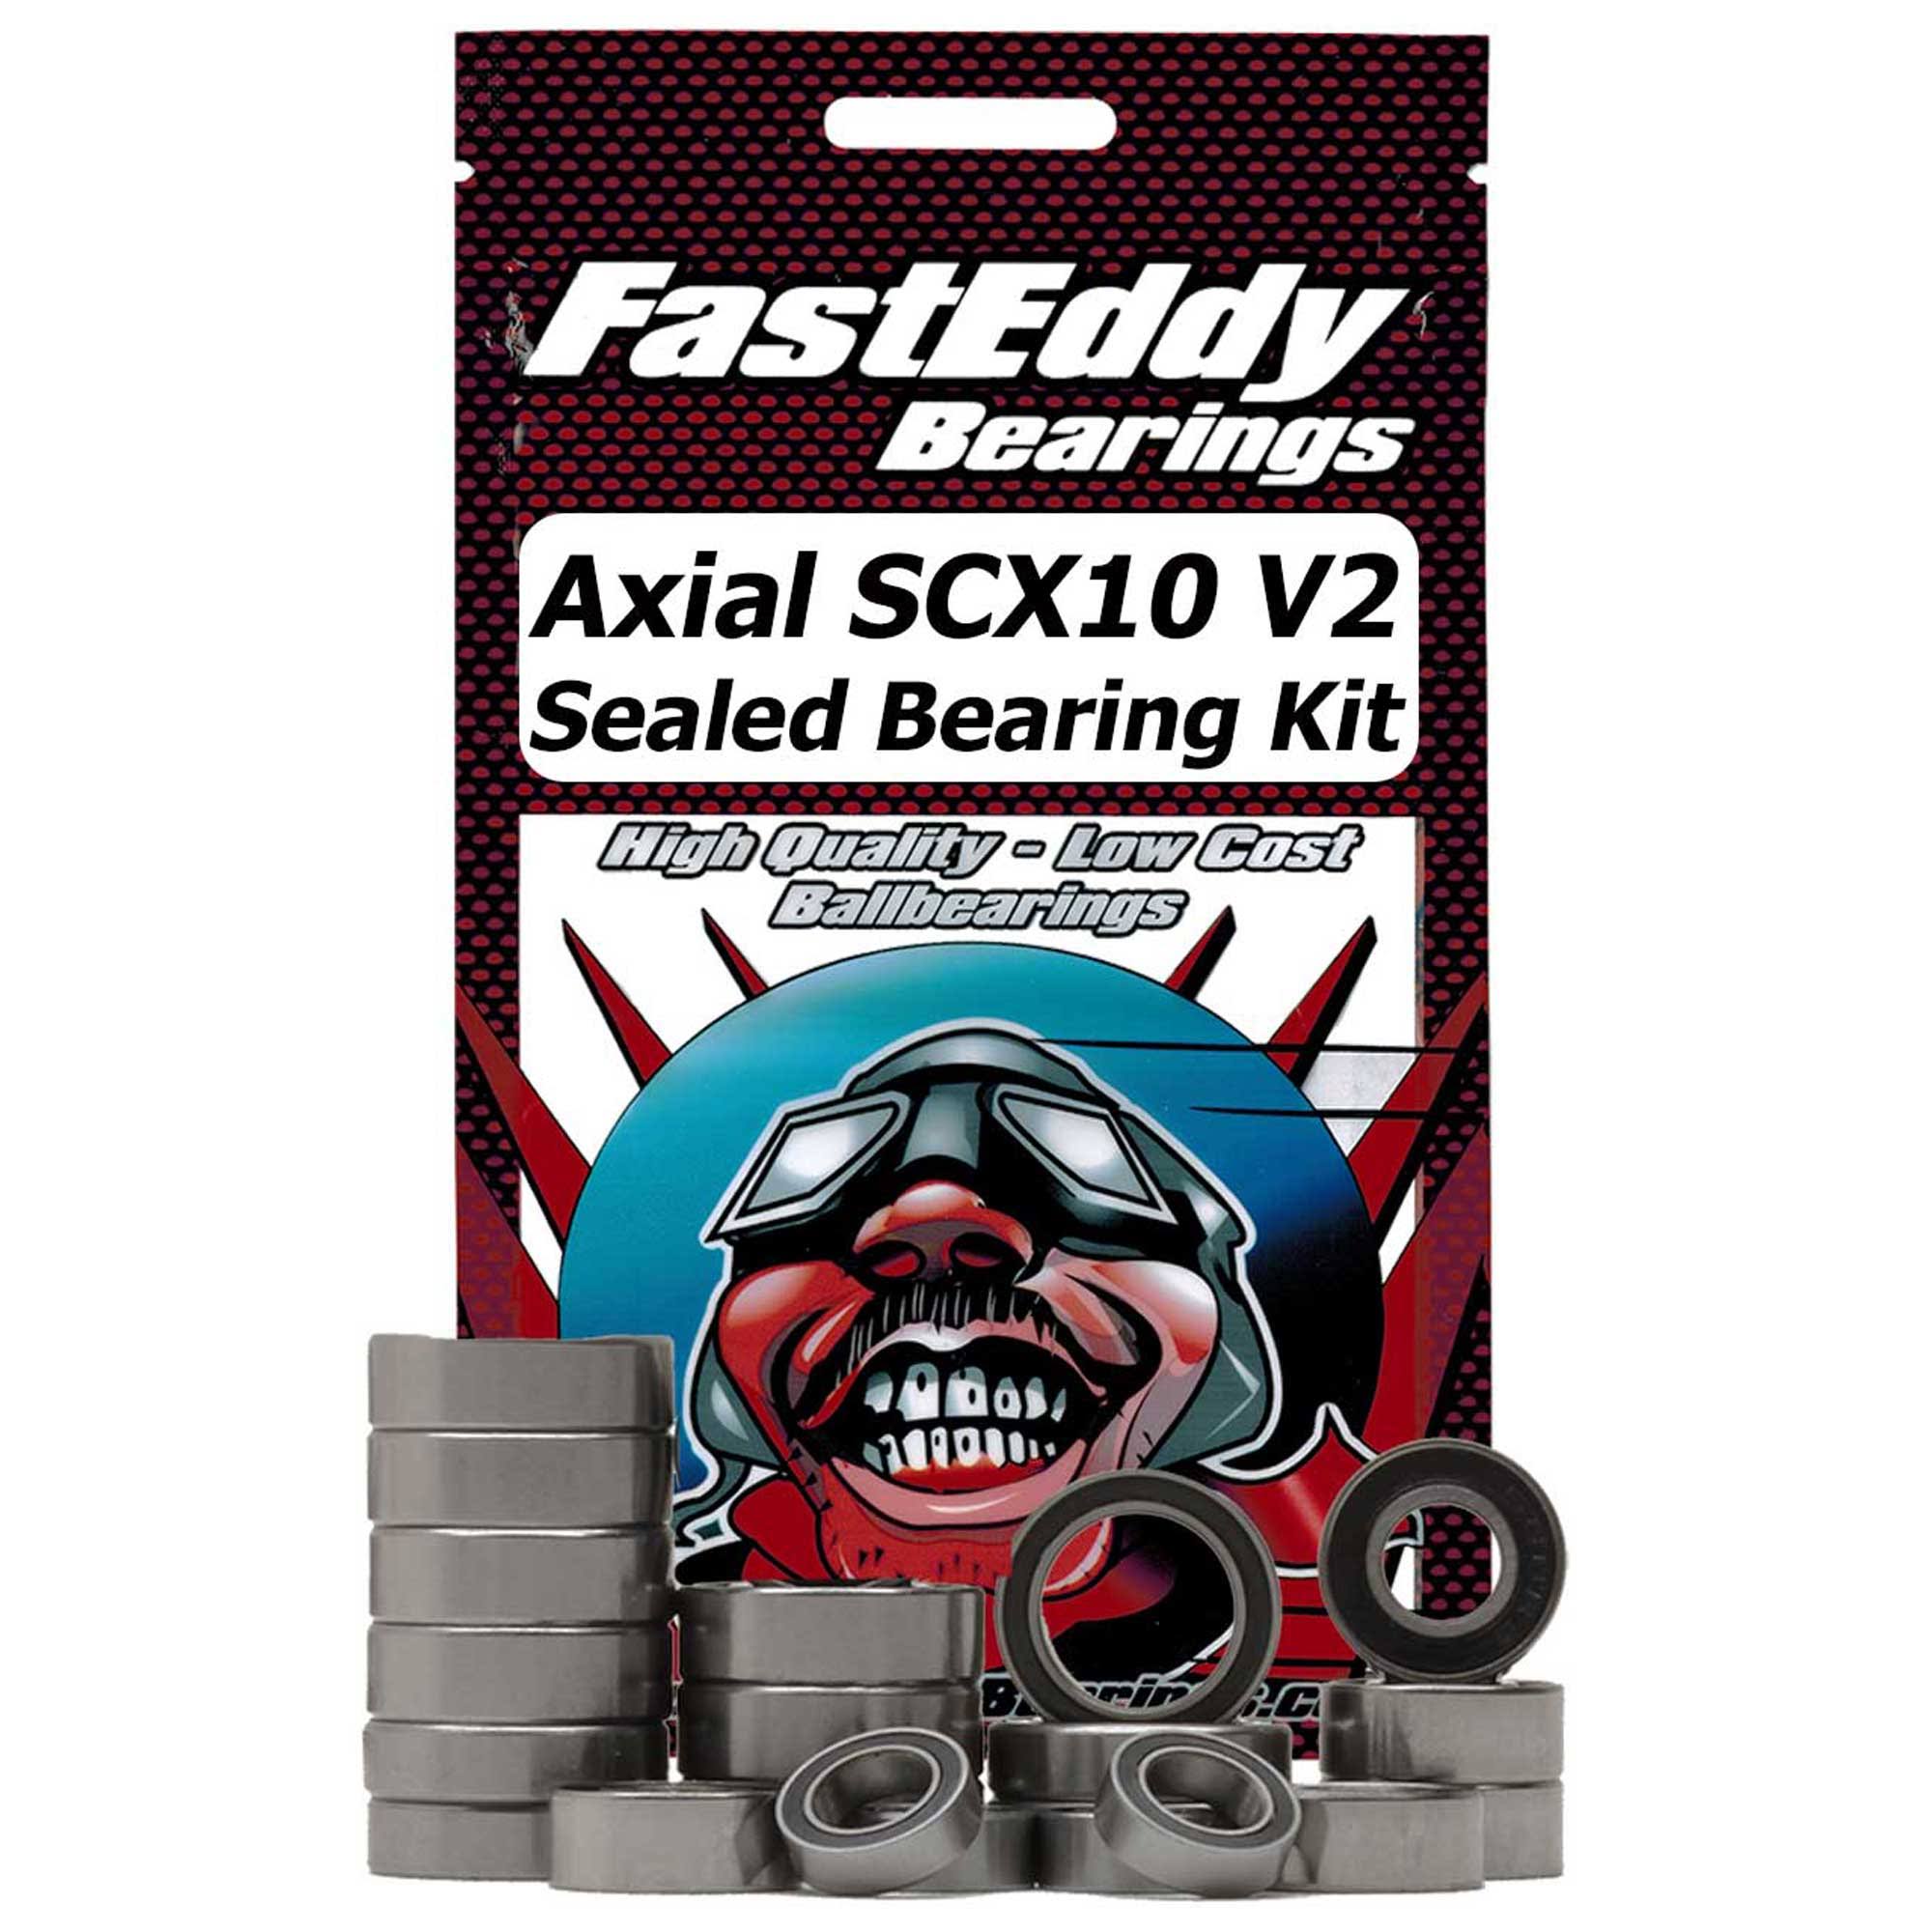 FastEddy TFE4437 Axial Scx10 II (V2) Sealed Bearing Kit